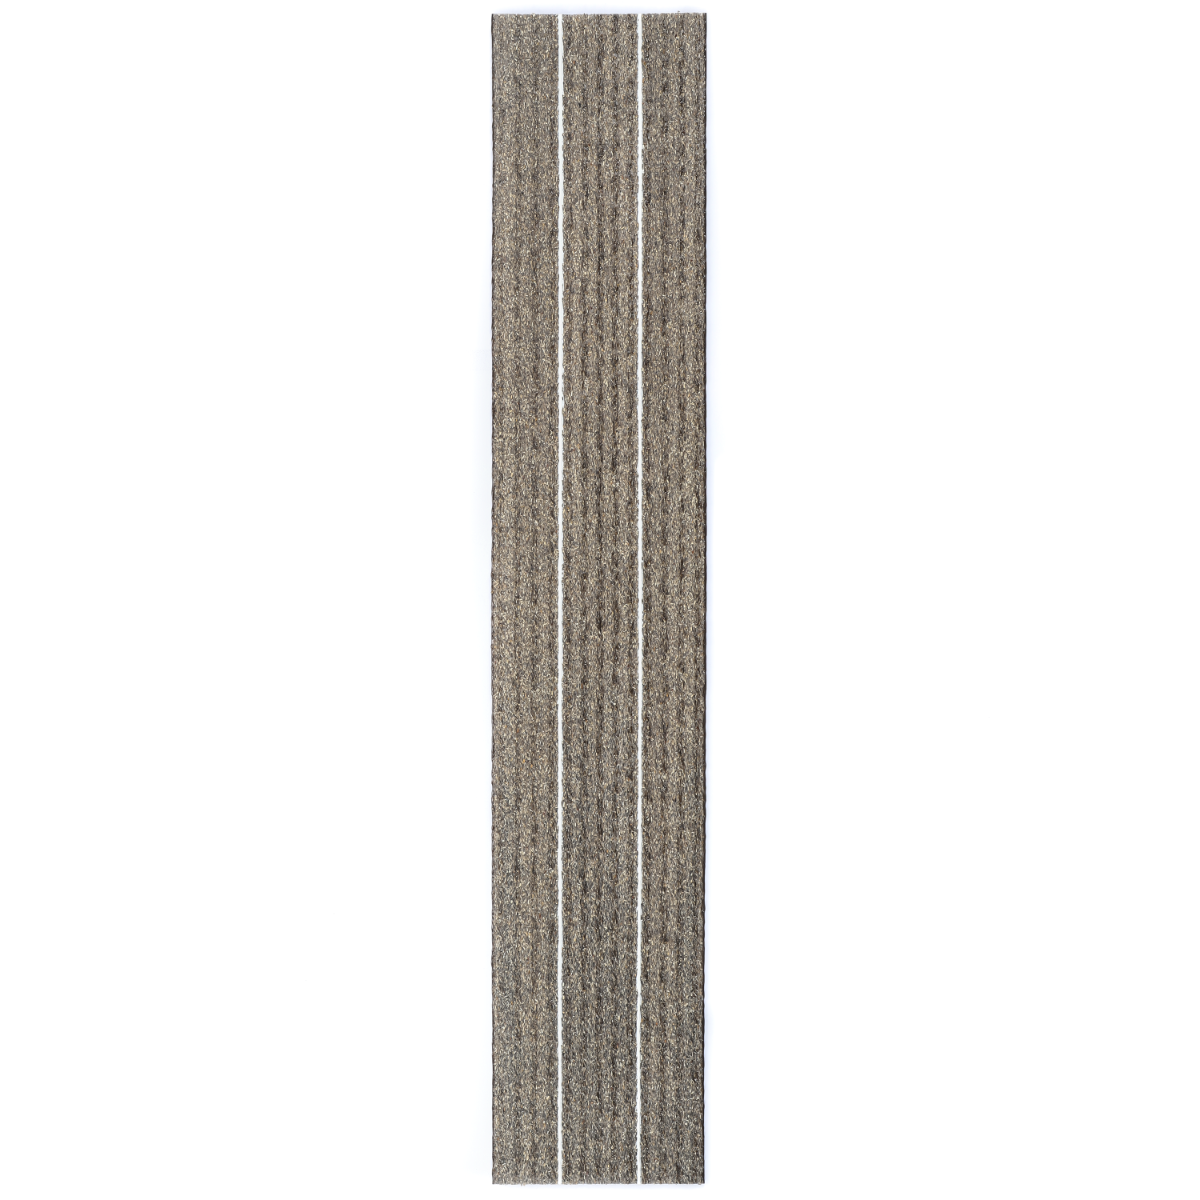 Woodcast, Ribbon,1mmx8cmx7.5cm-Natural